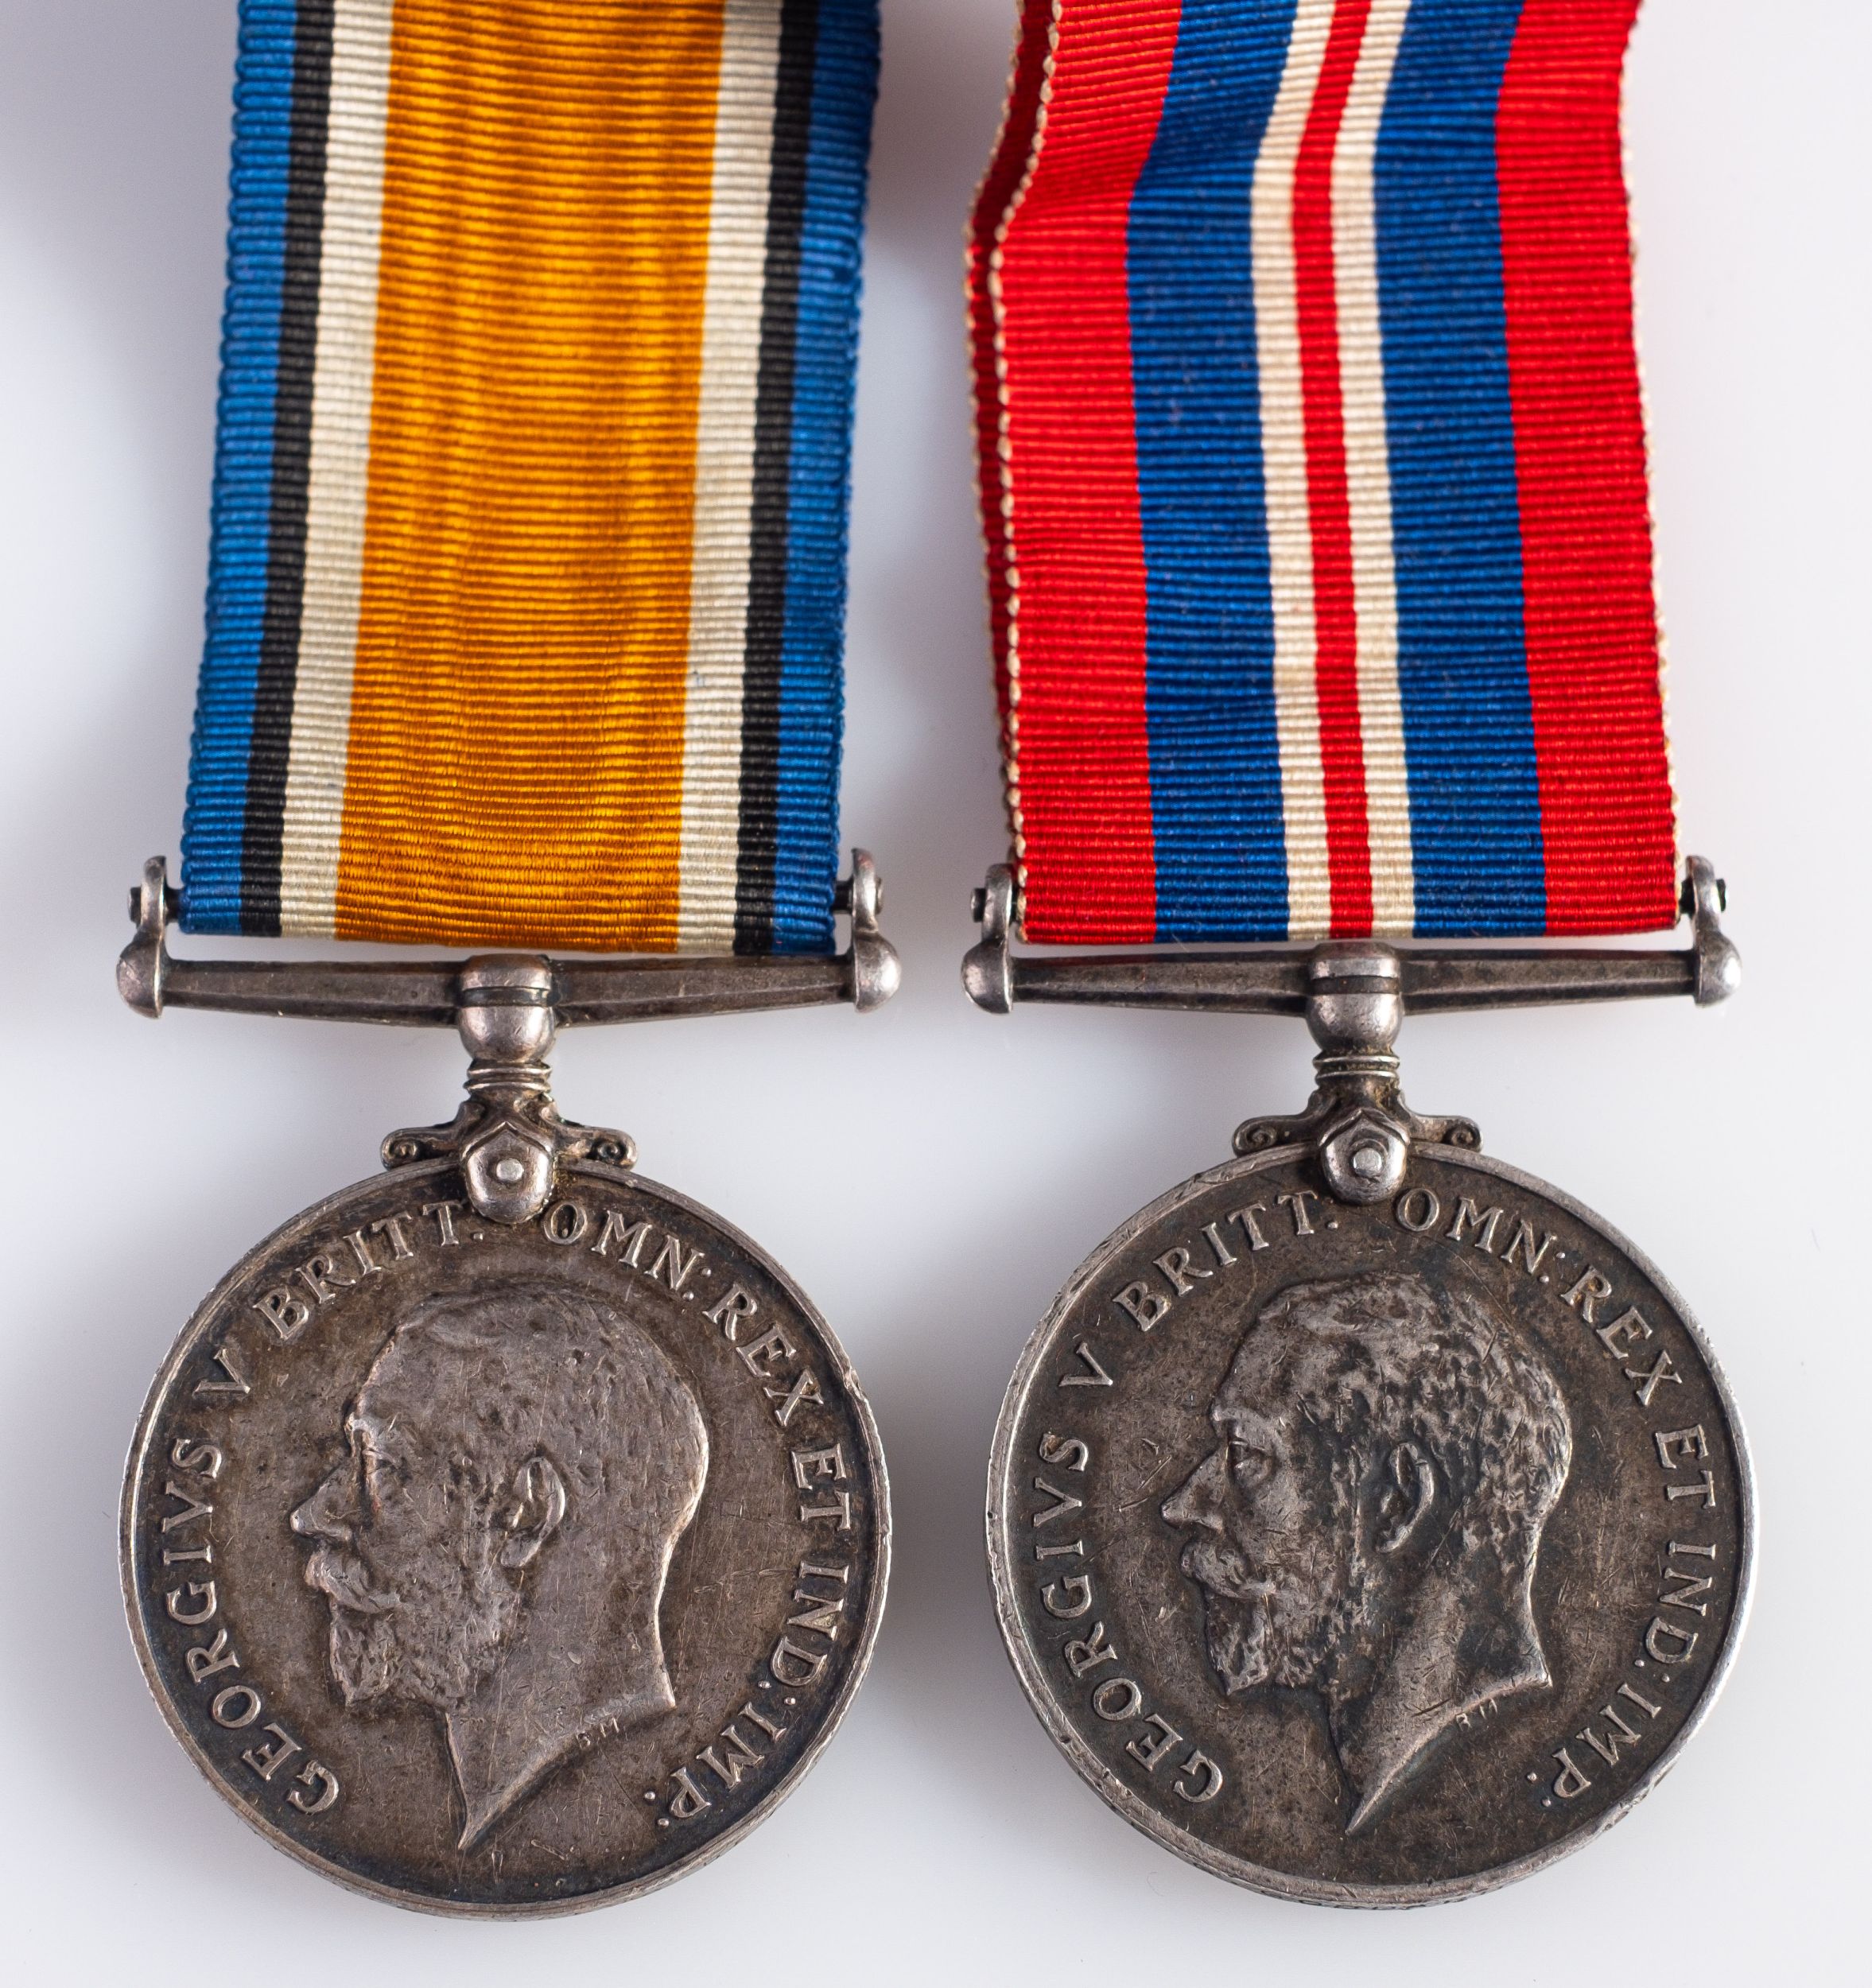 Two WWI medals '2906 Pte G. Goddard Devon R' '200174 Pte J.